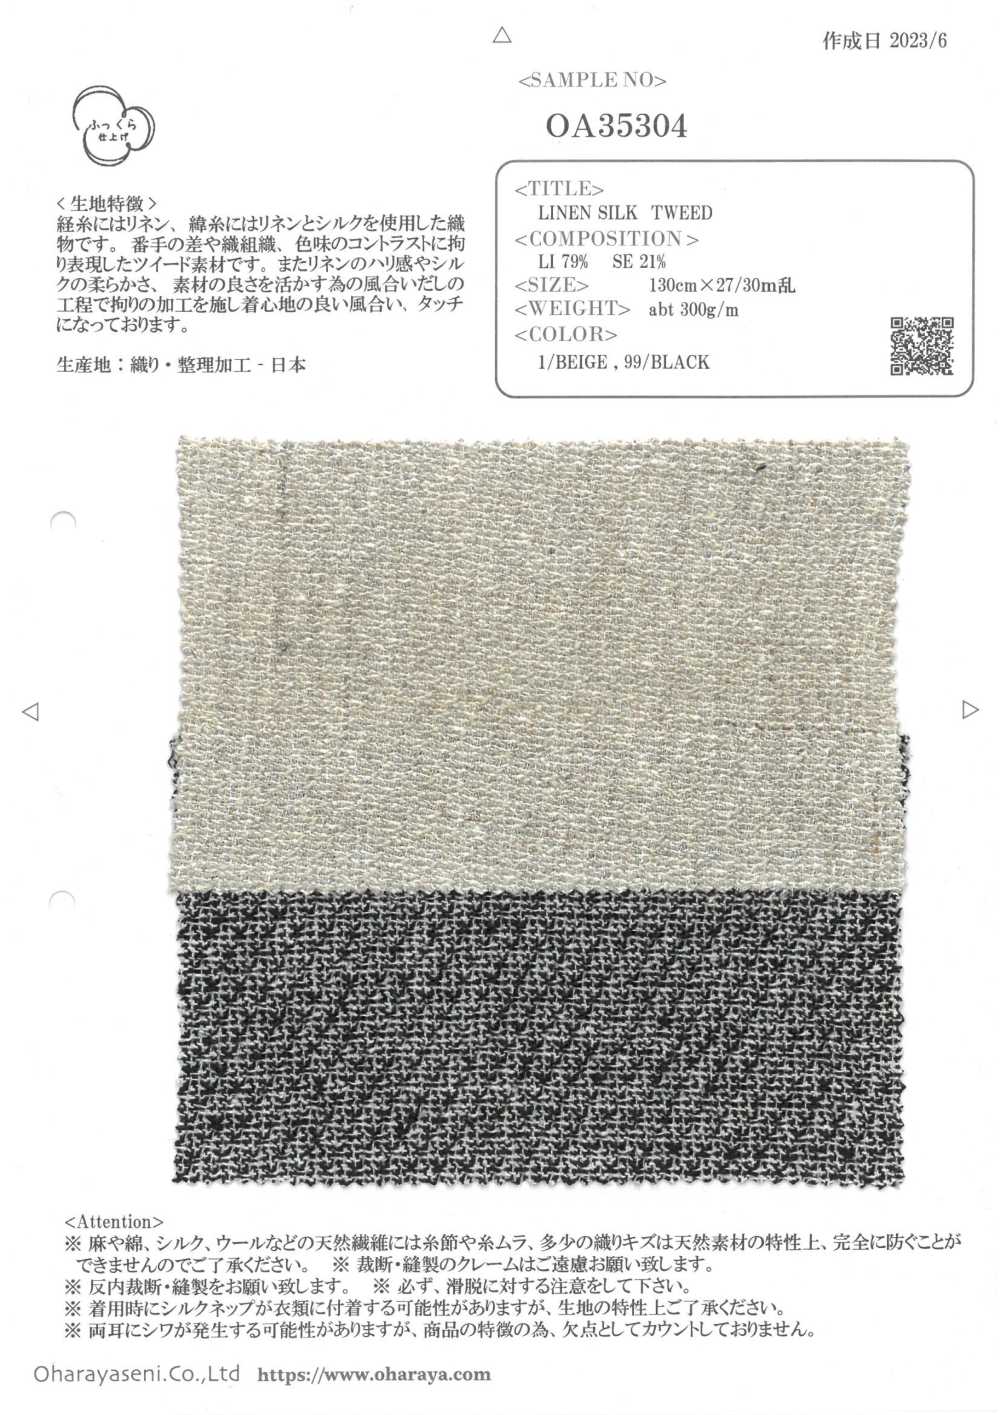 OA35304 TWEED LINO SEDA[Fabrica Textil] Oharayaseni